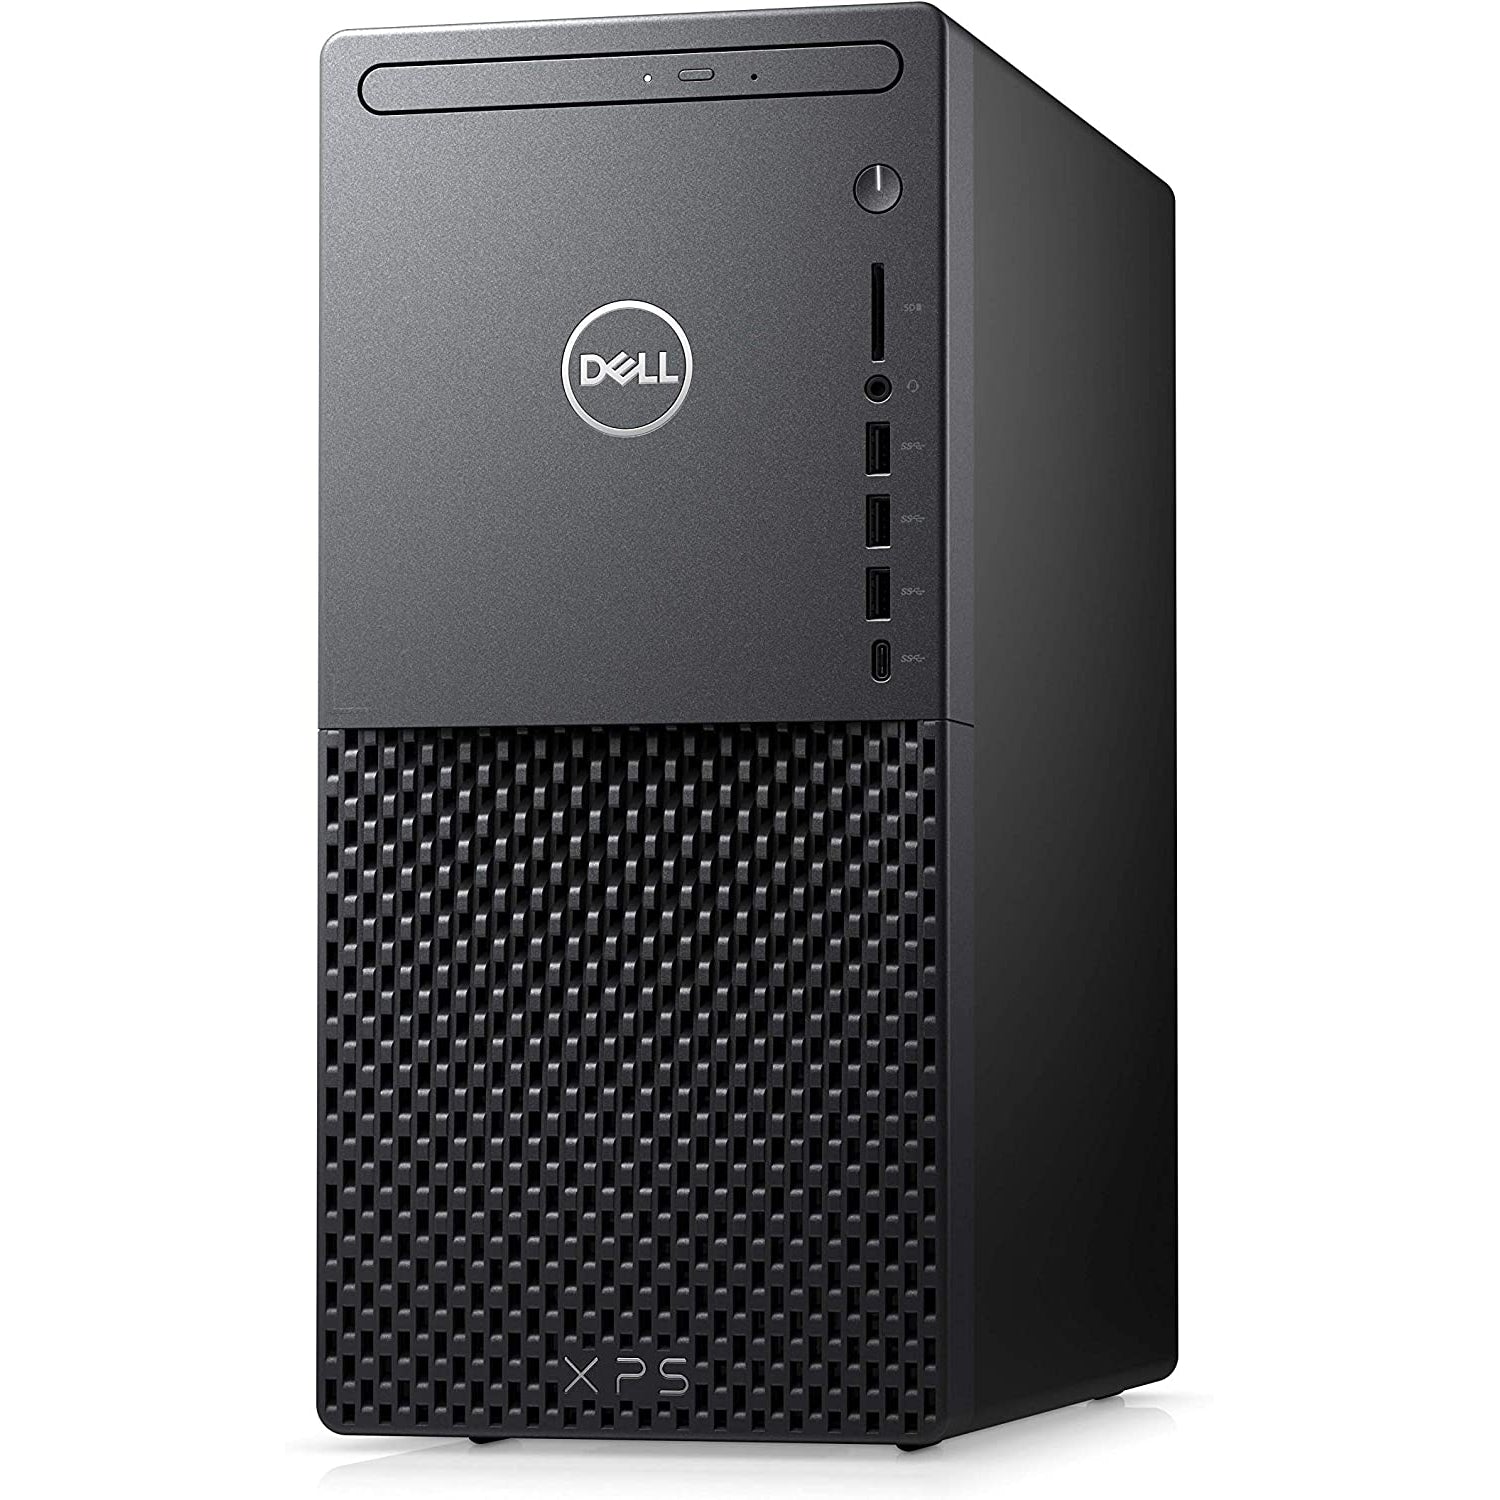 Dell XPS 8940 Desktop PC, Intel Core i7 10th Gen, 8GB RAM, 1TB HDD + 512GB NVMe, Black